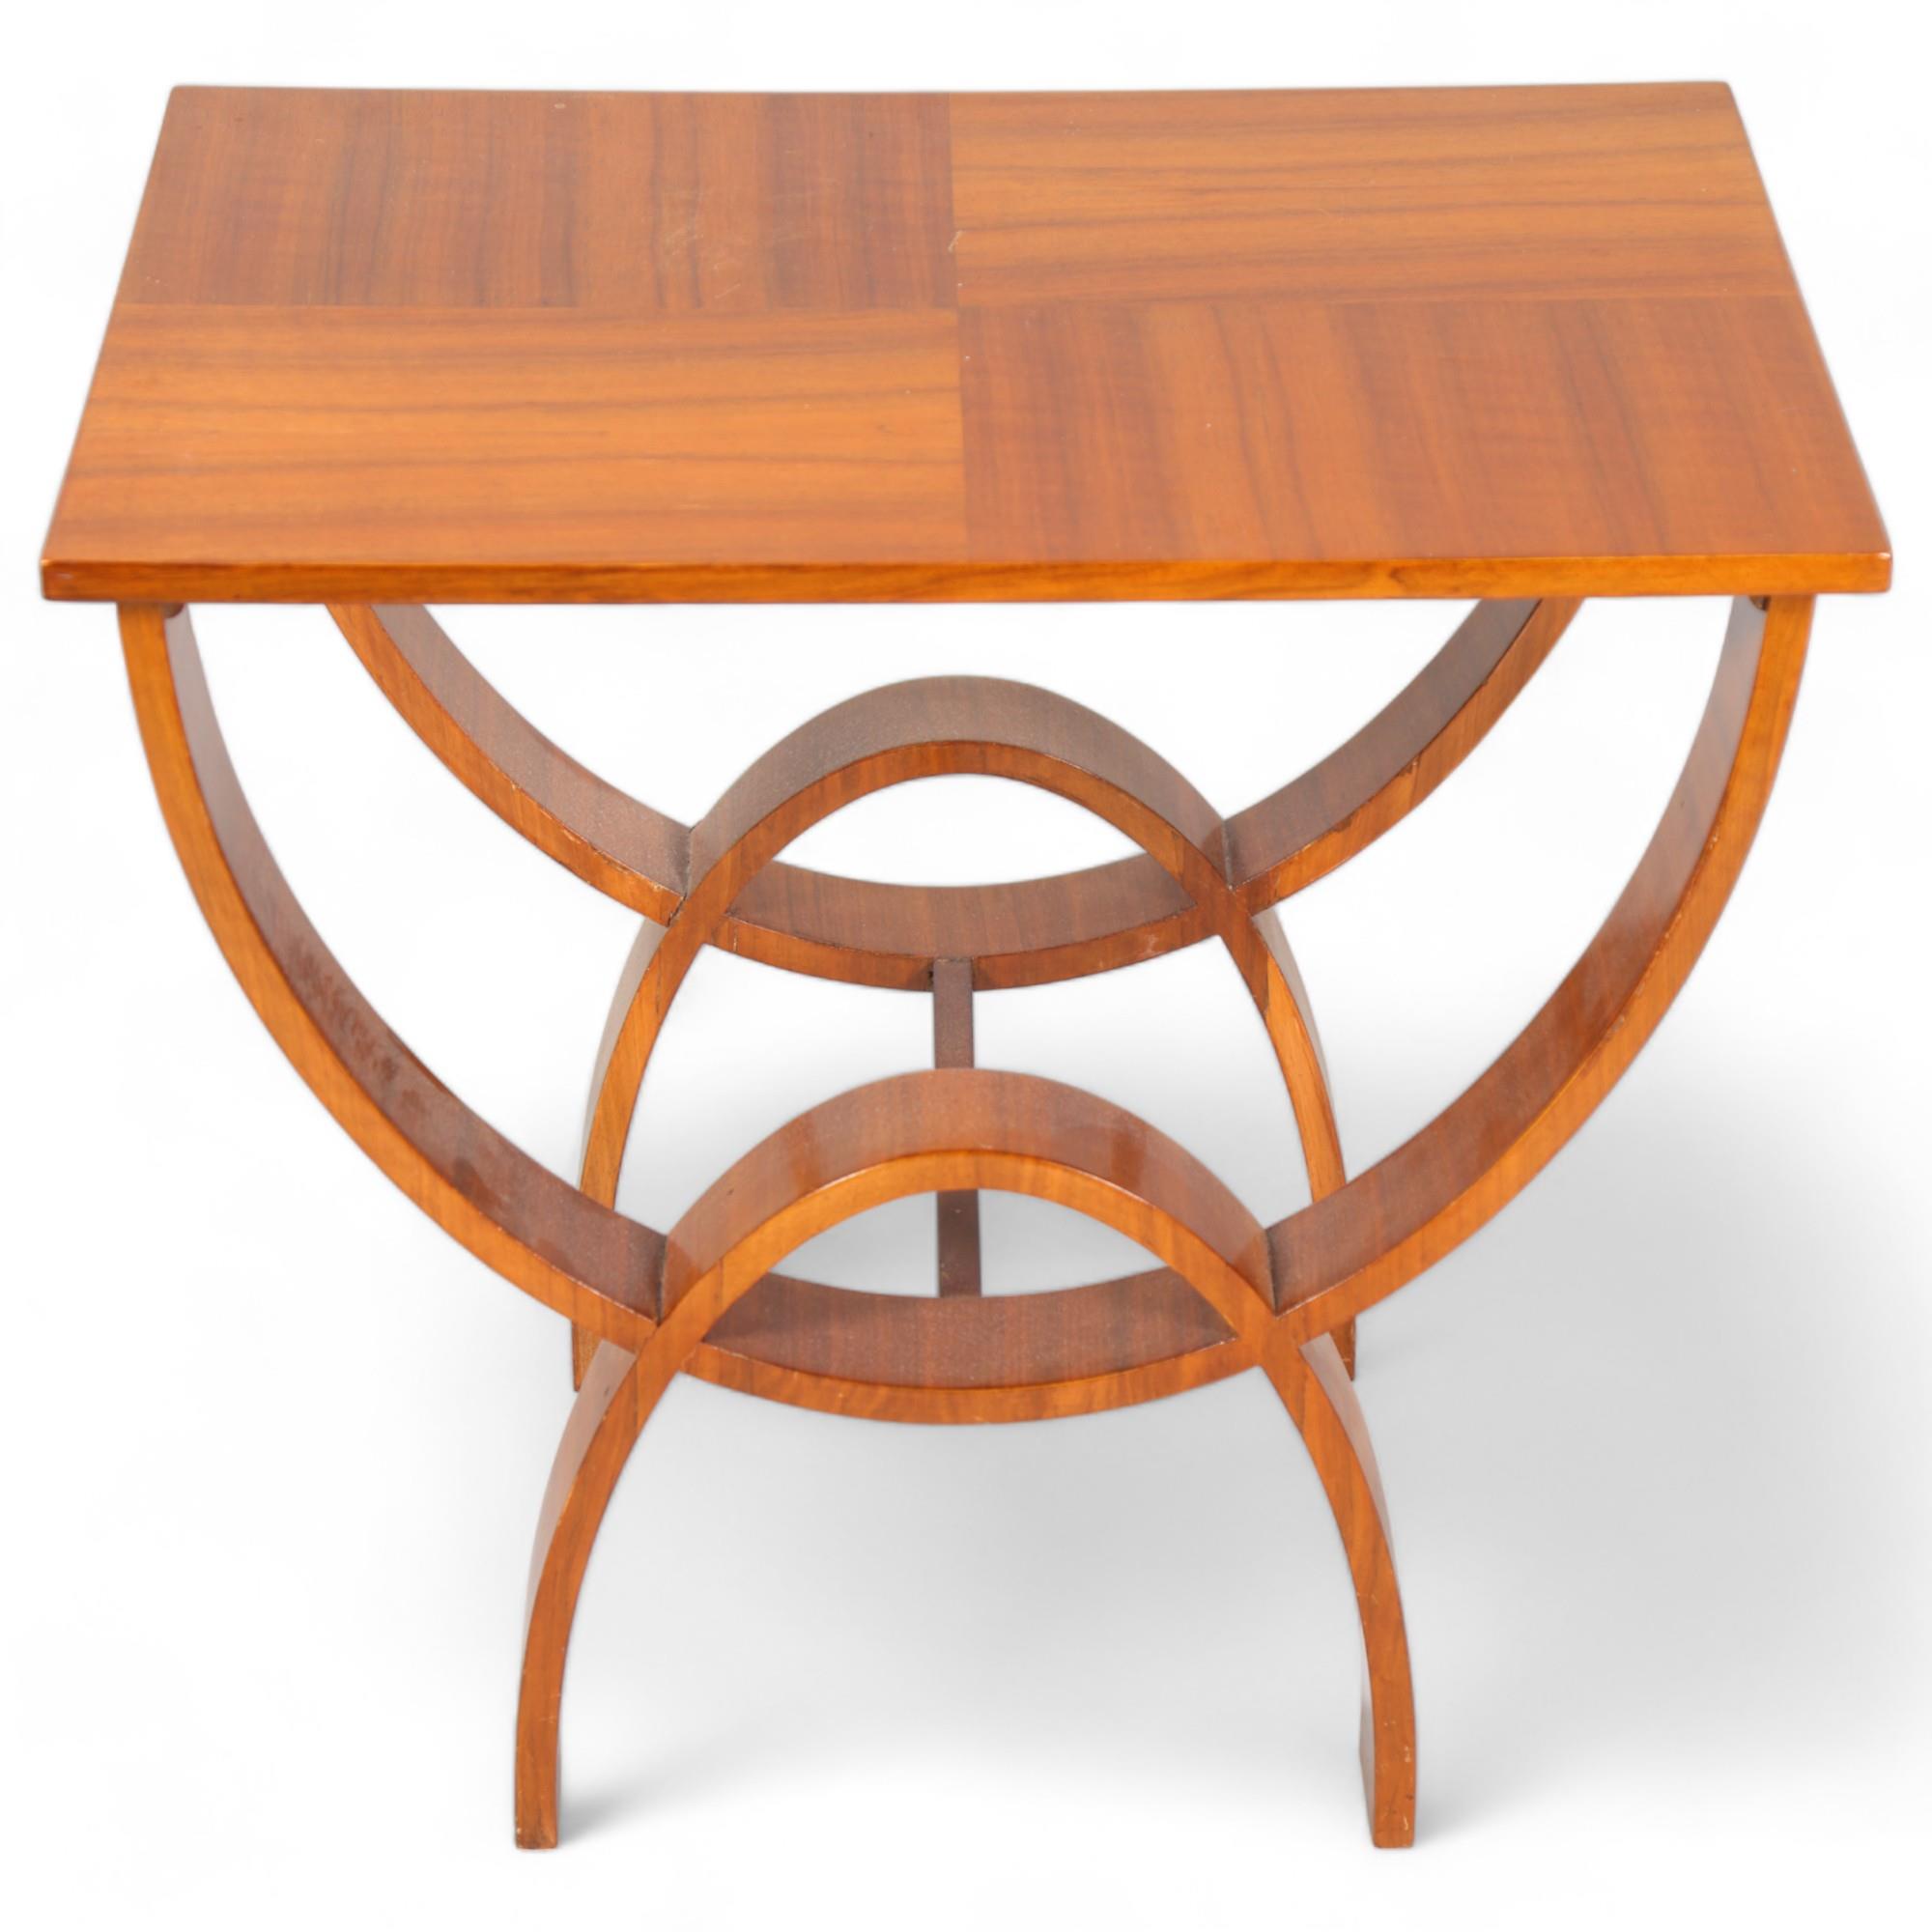 Art Deco walnut rectangular occasional table, with quarter veneer top, 58cm x 41cm, height 53cm